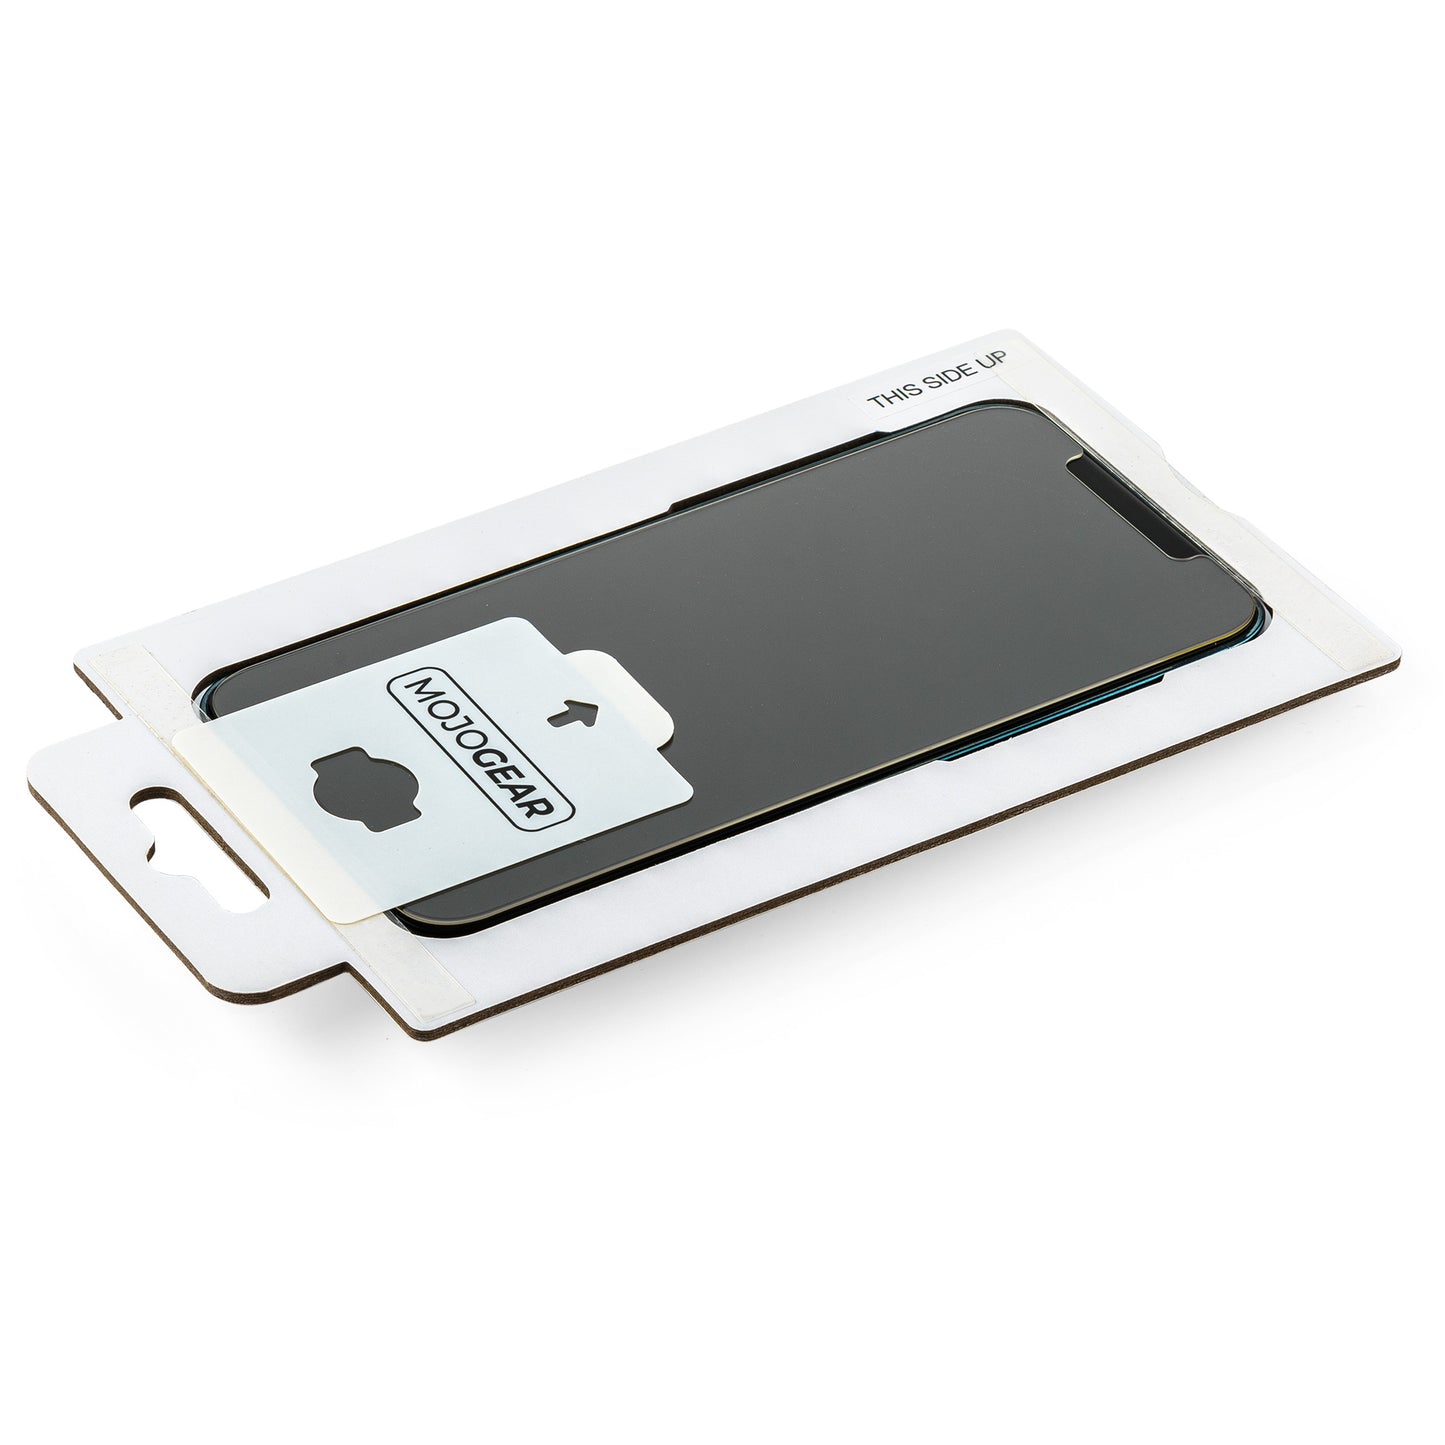 MOJOGEAR Screenprotector met Montageframe voor iPhone - Extra sterk beschermglas